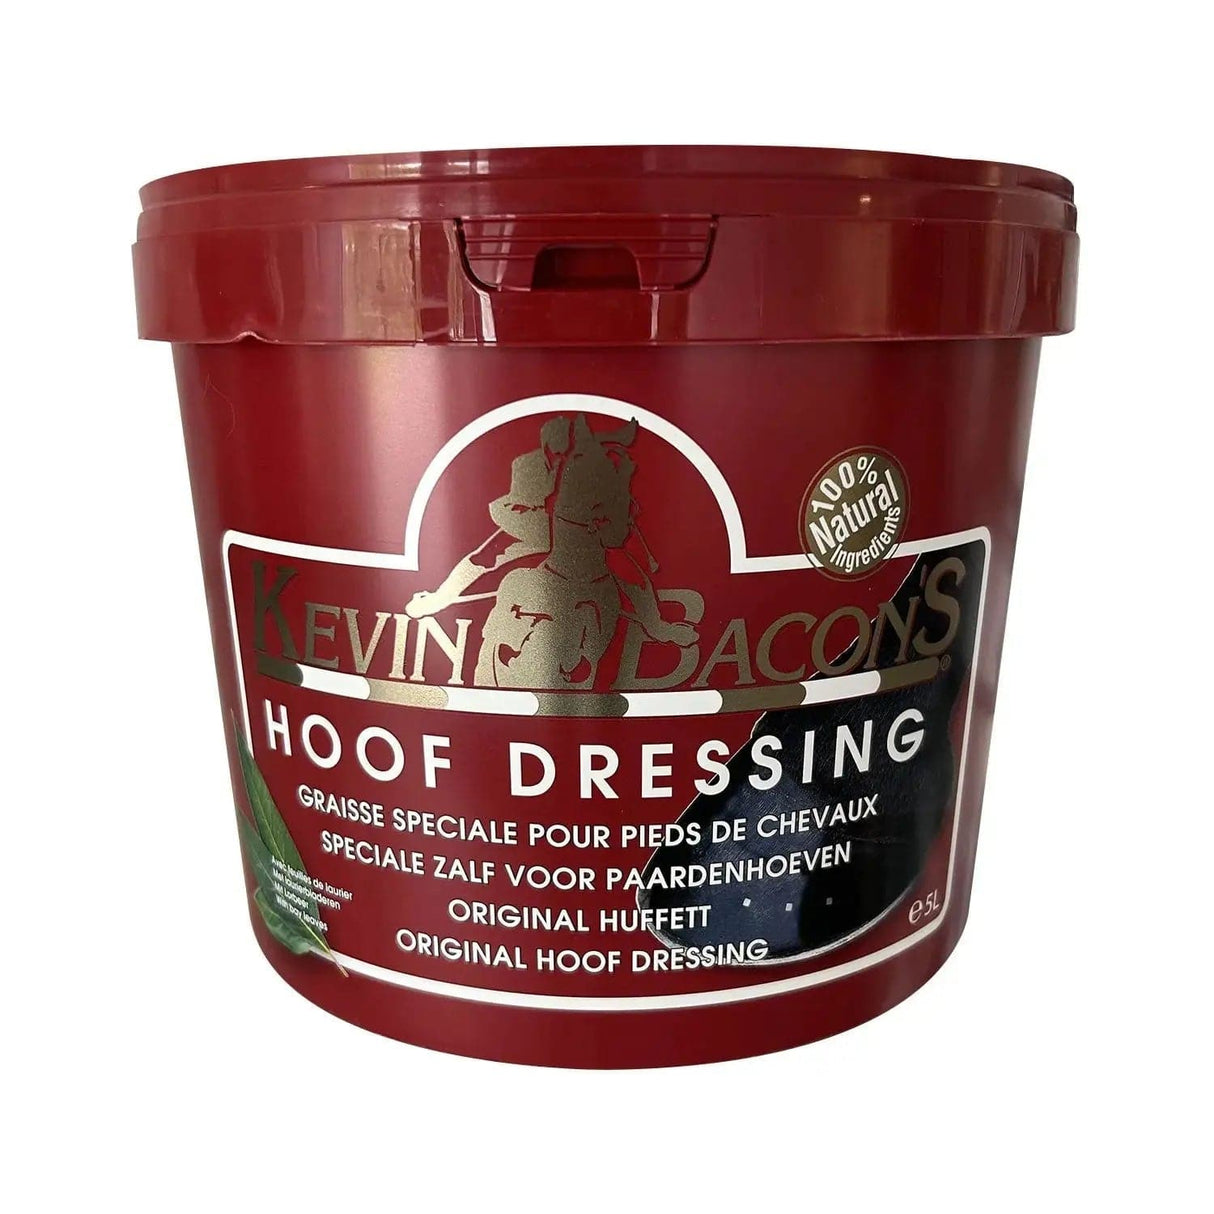 Kevin Bacon's Hoof Dressing Hoof Care 2.5 Lt Barnstaple Equestrian Supplies